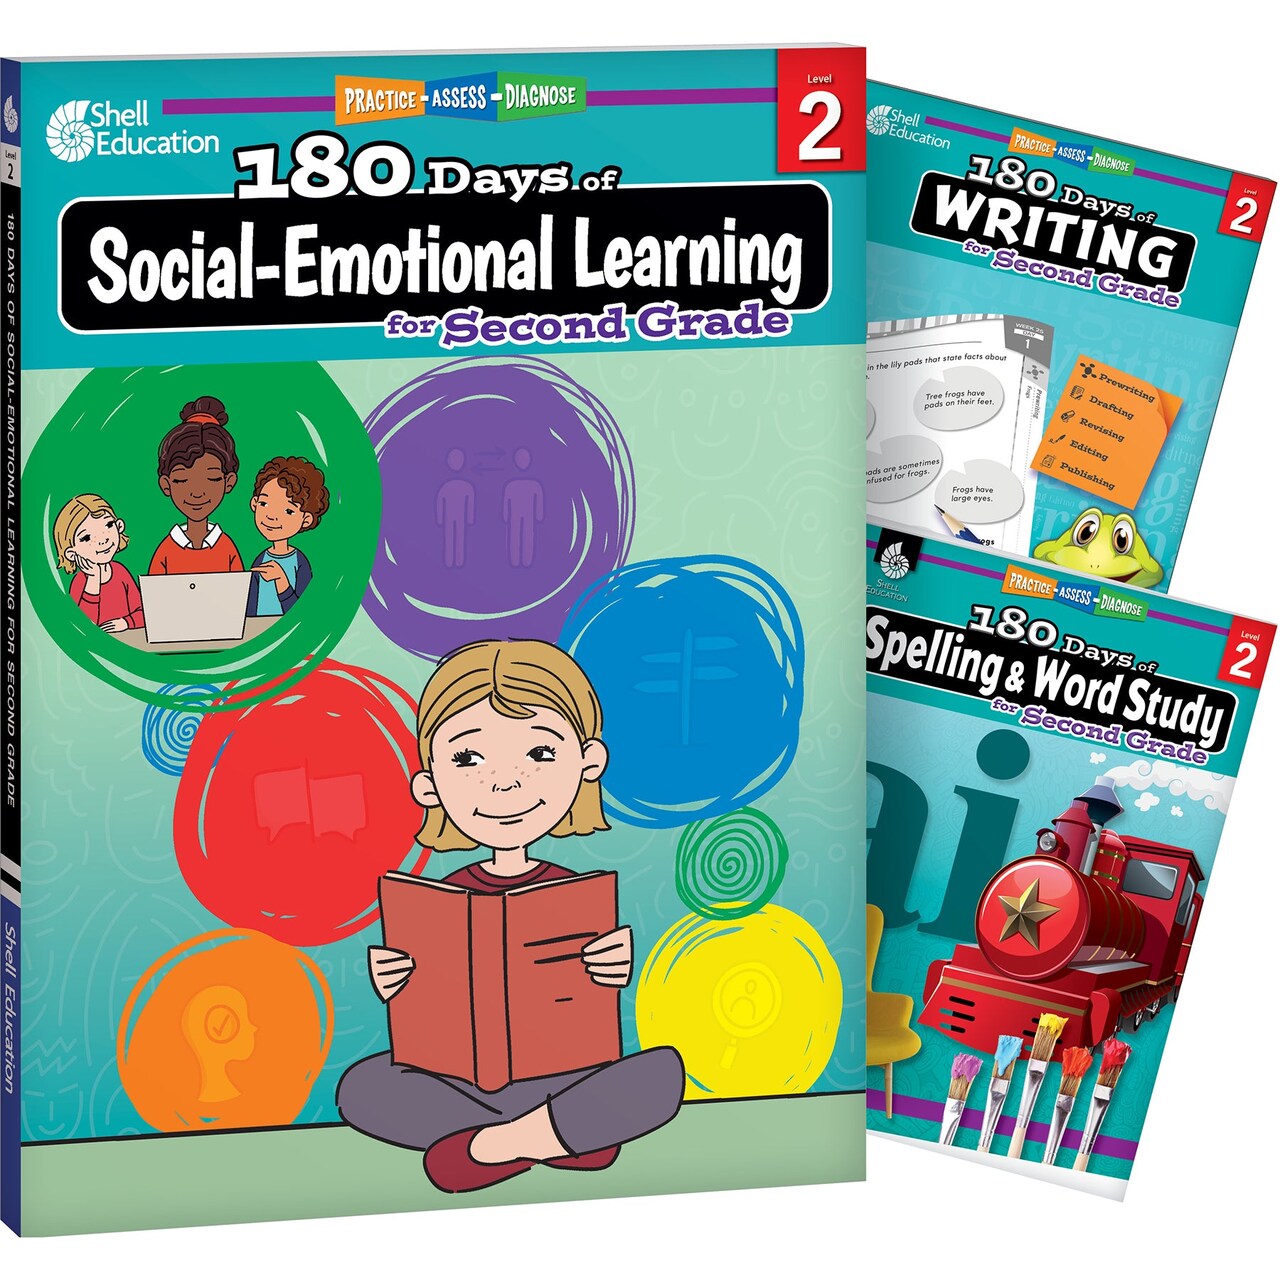 180 Days Books: Social-Emotional Learning, Writing, & Spelling for